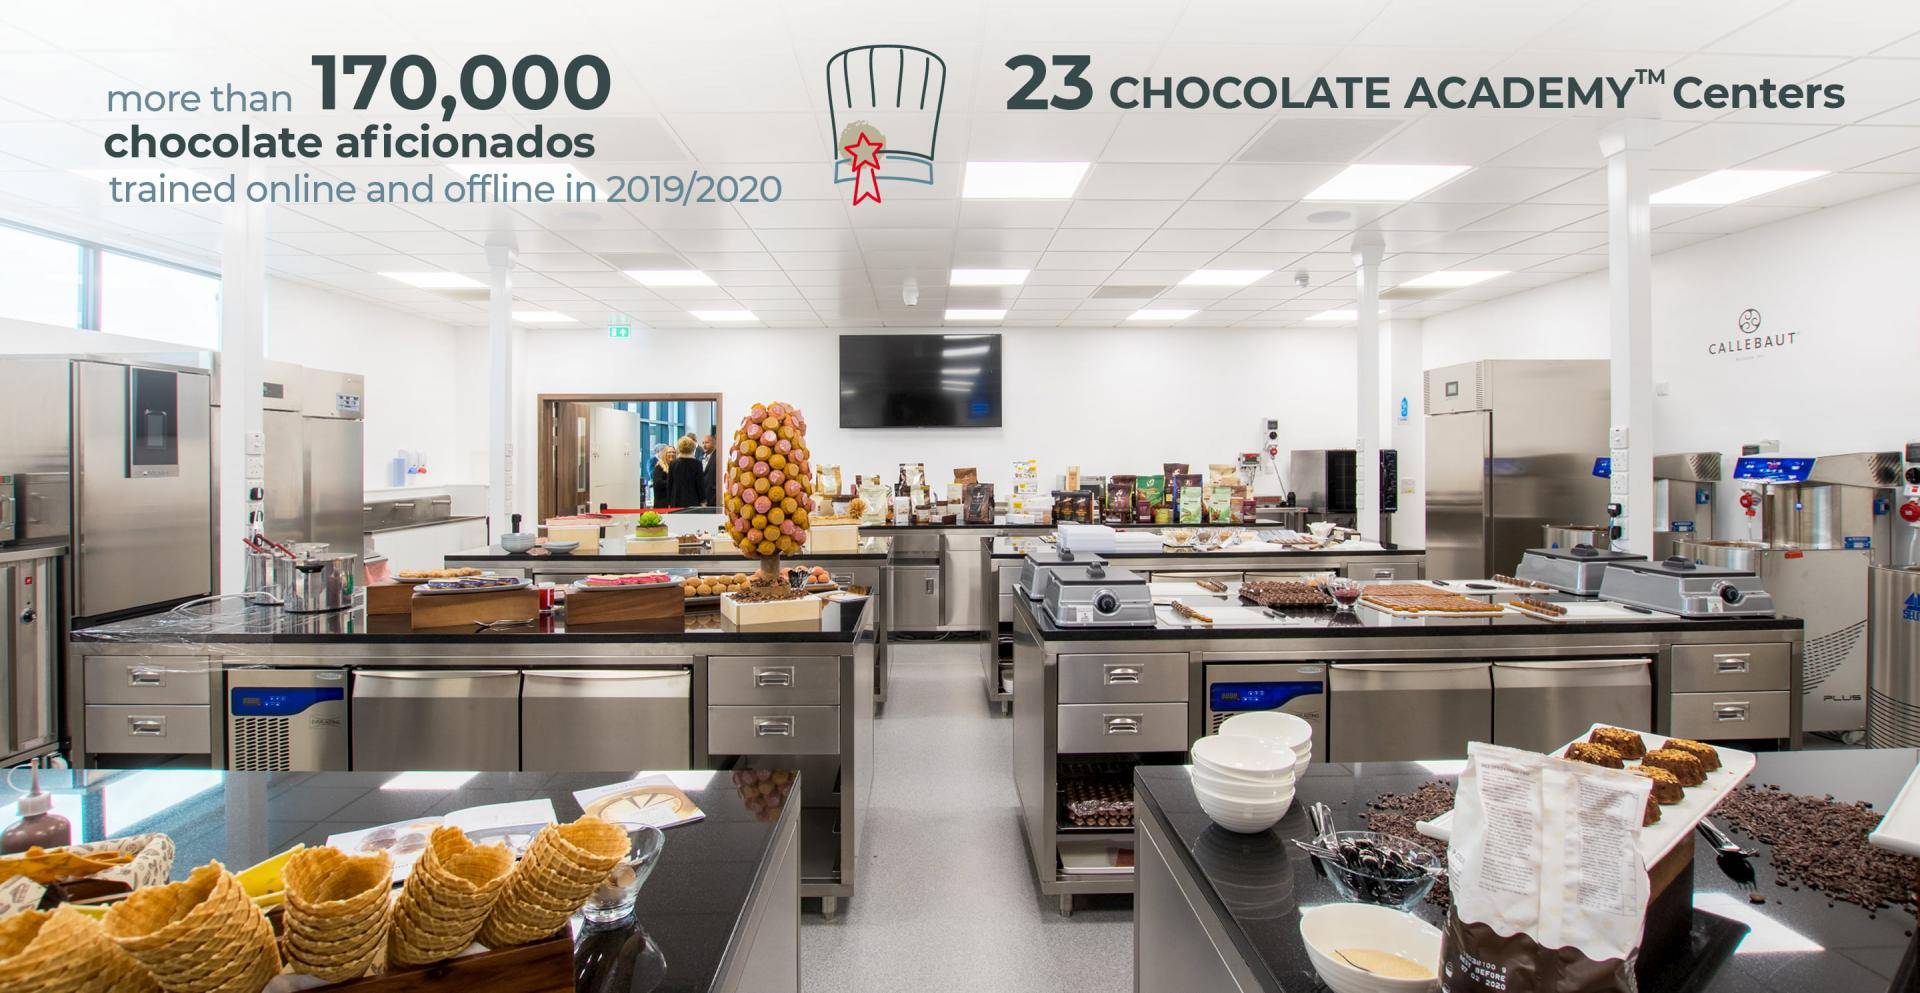 Chocolate Academies Fiscal Year 2019/20 Barry Callebaut